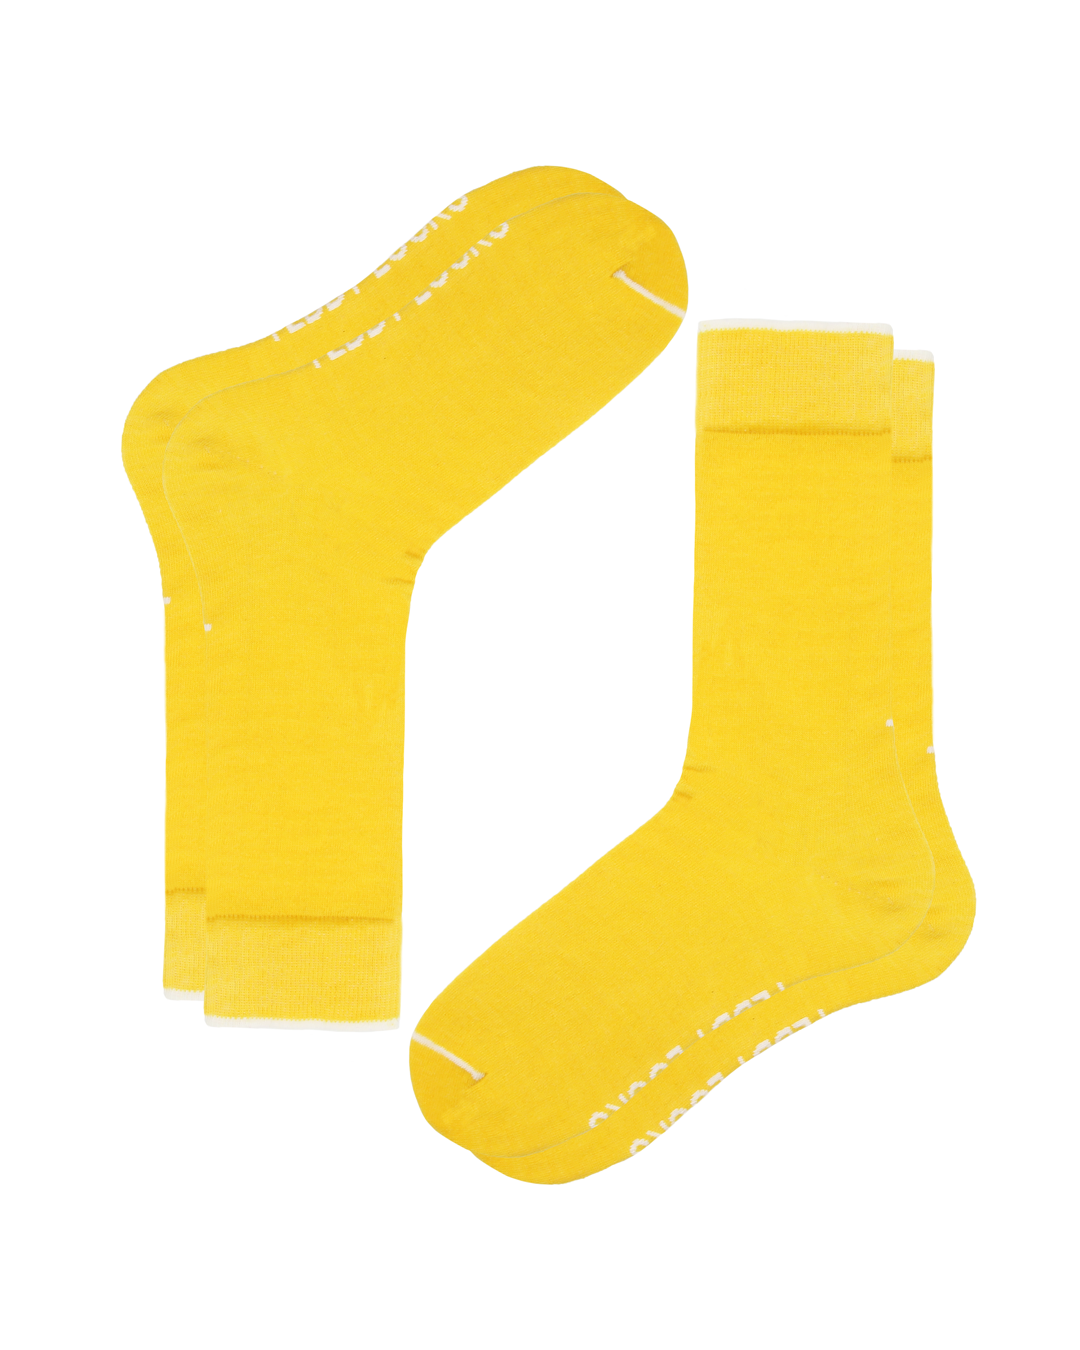 Mens crew socks in yellow with white detailing. Teddy Locks signature yellow socks.